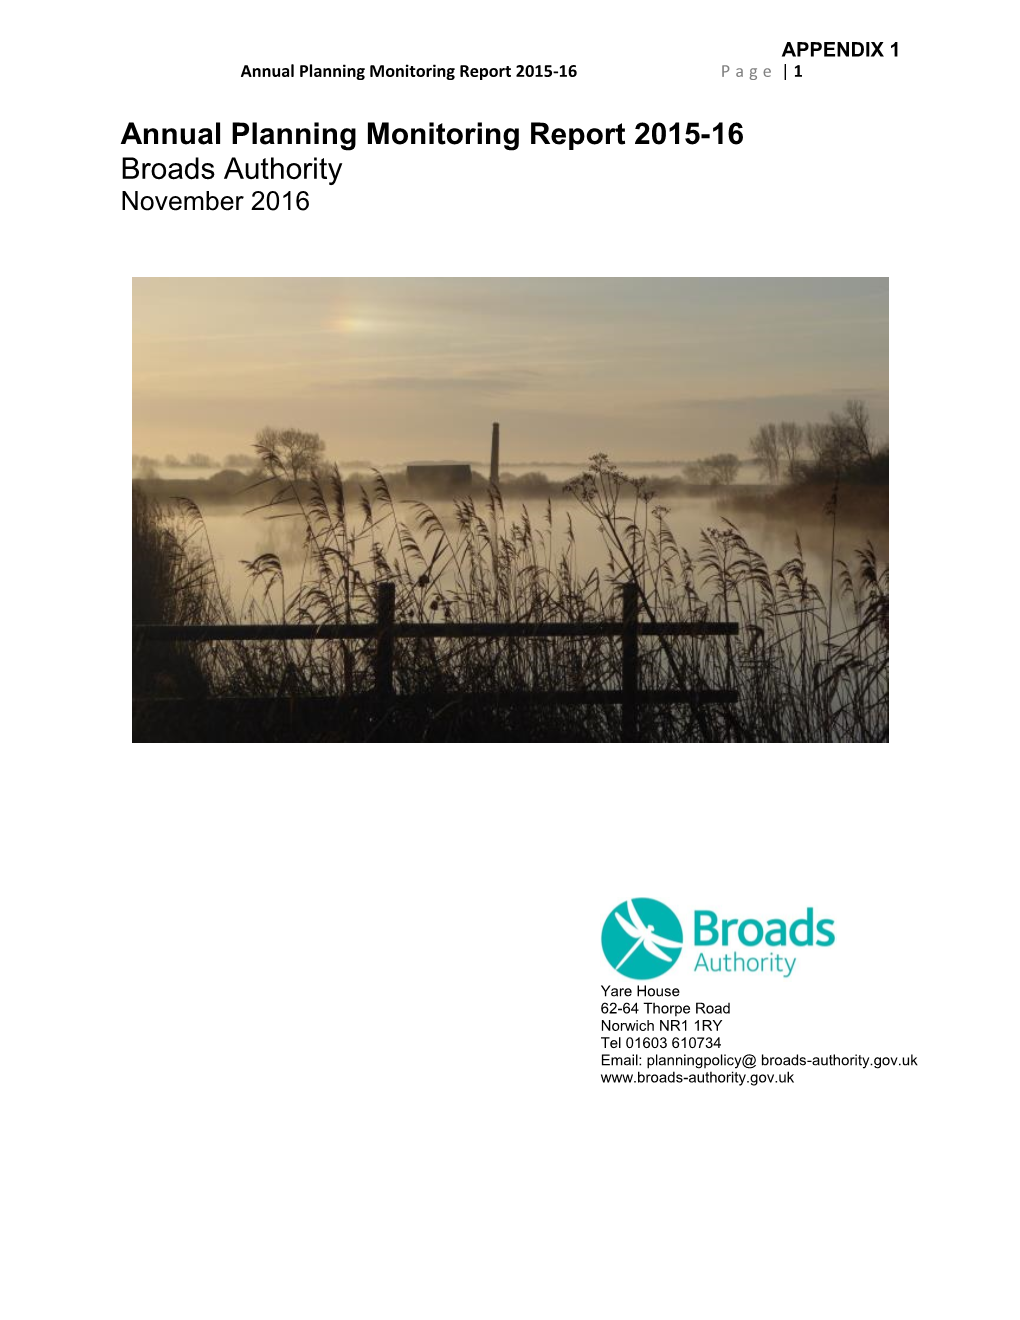 Annual Monitoring Report 2015-16 Main